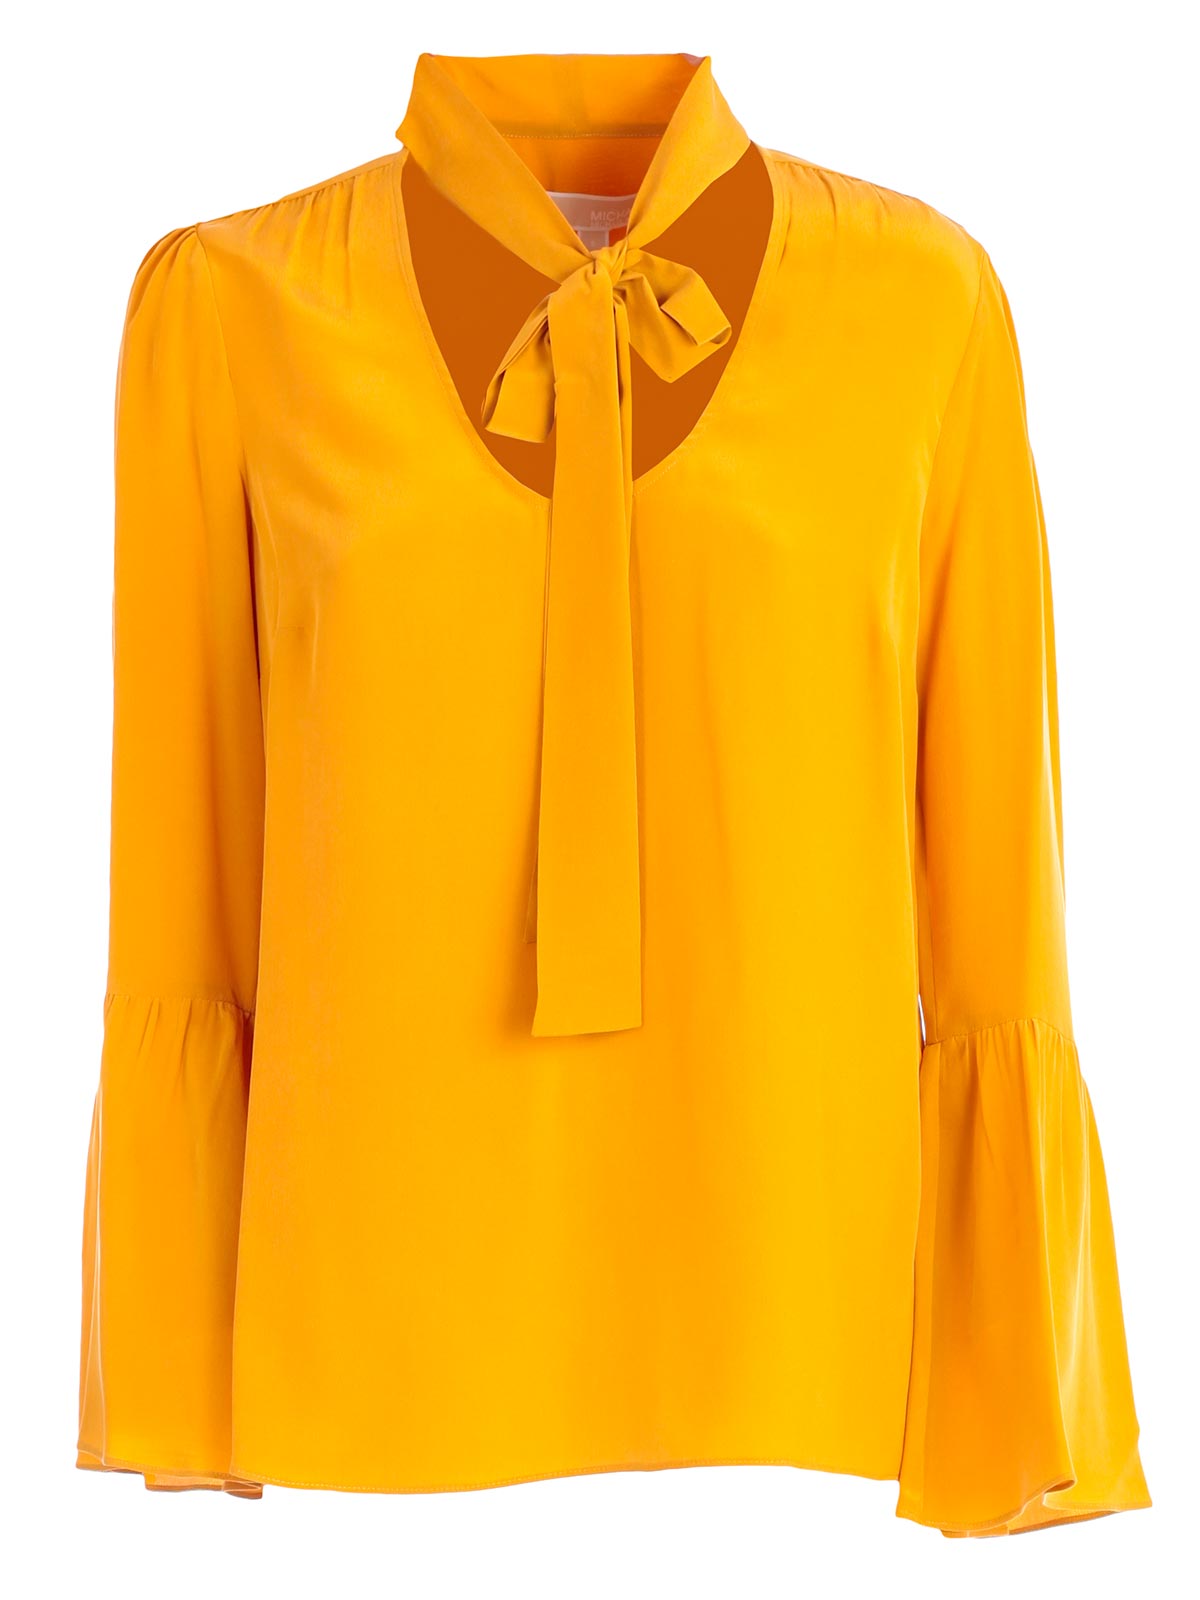 michael kors shirts womens yellow